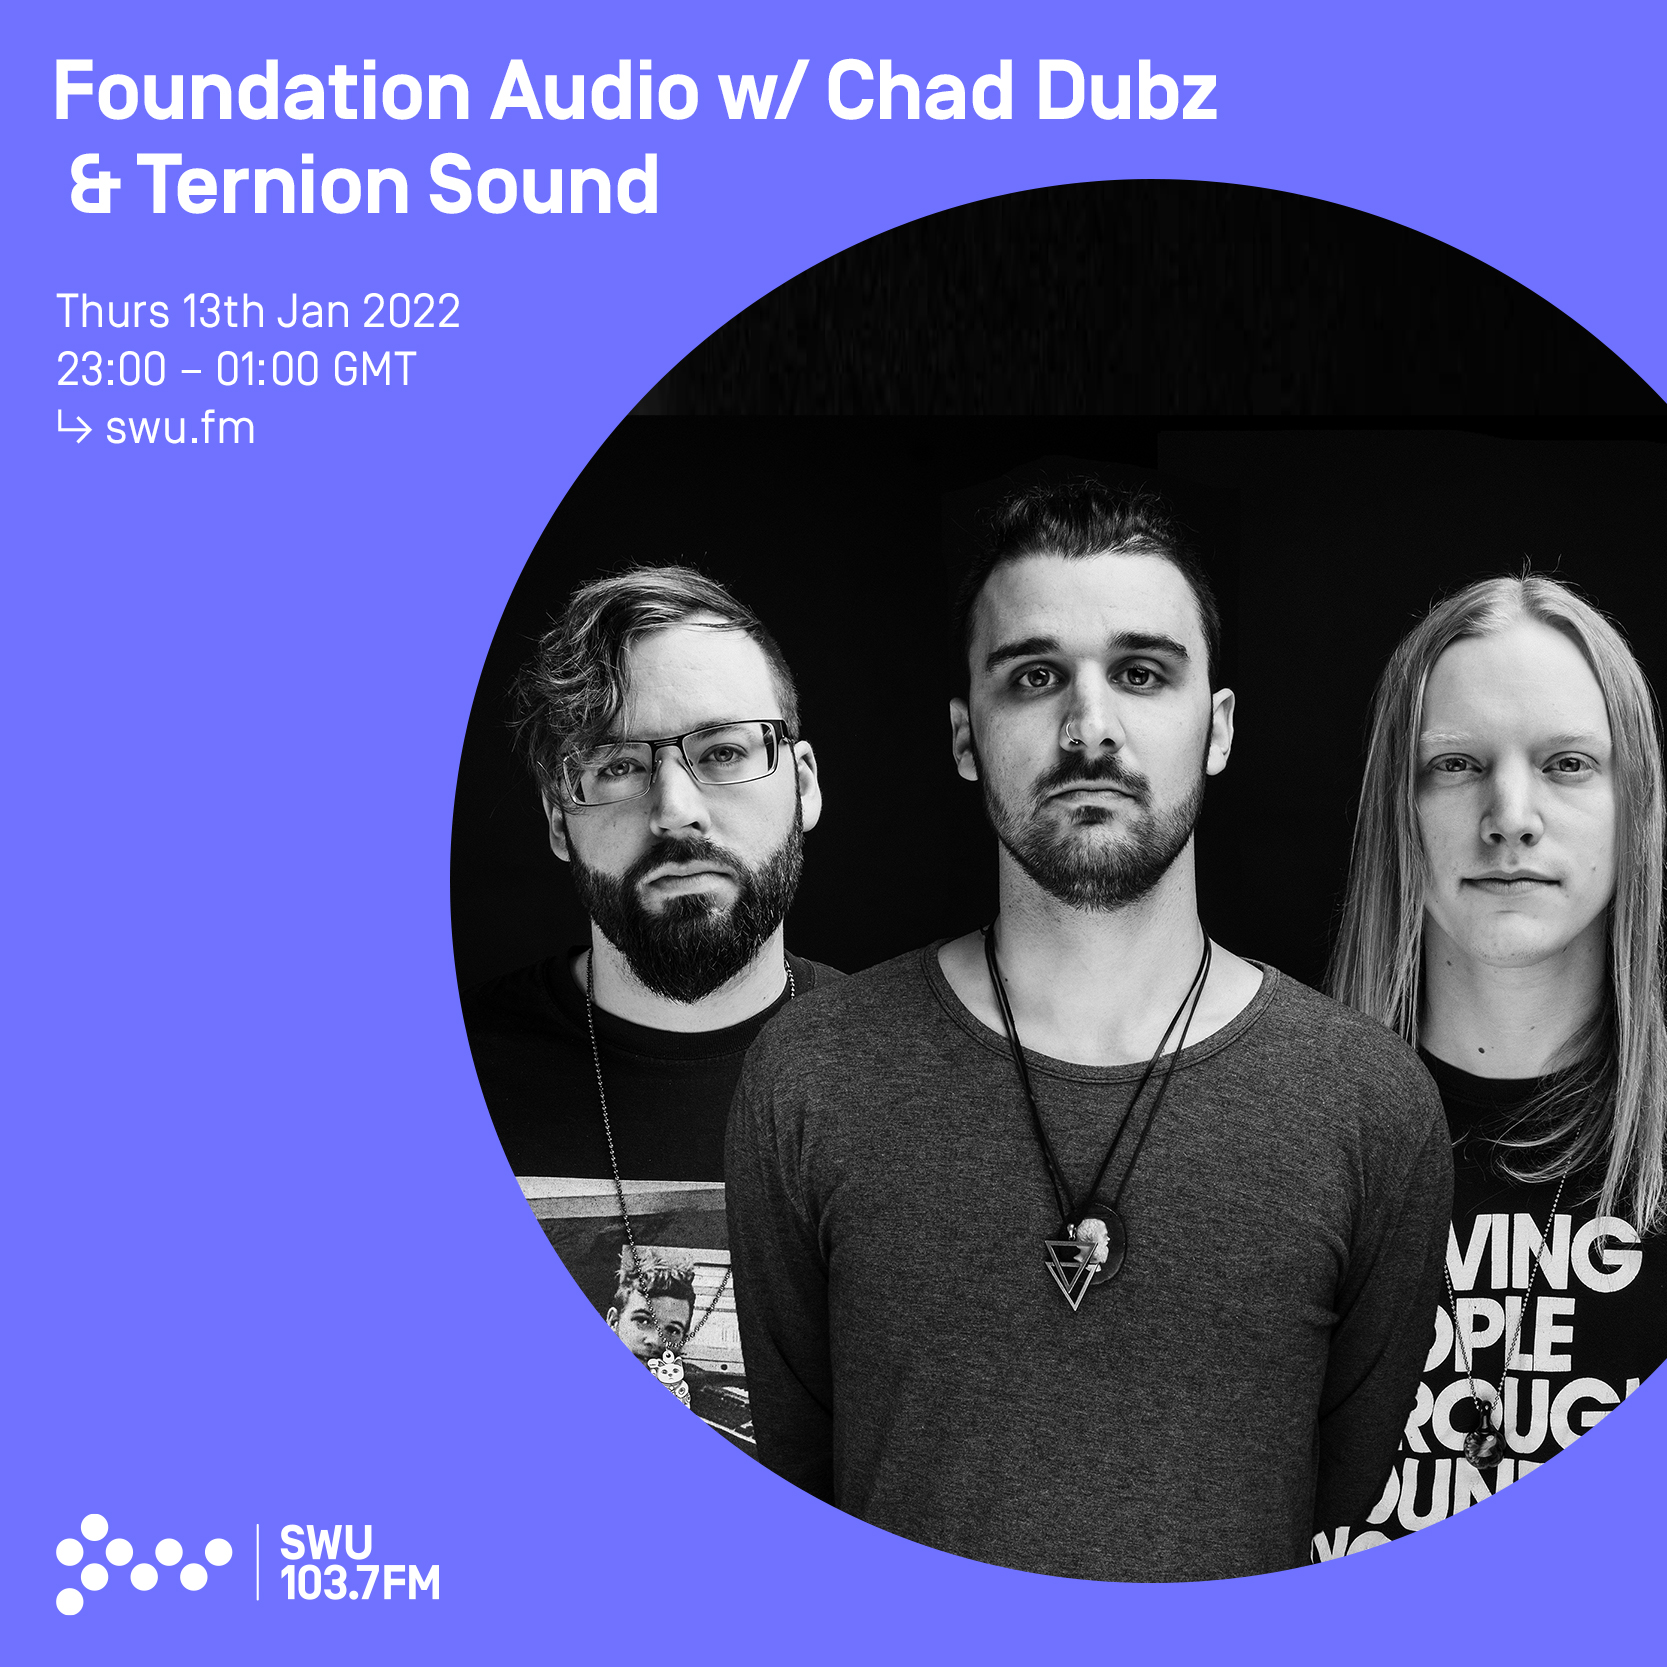 Foundation Audio w/ Chad Dubz & Ternion Sound 13TH JAN 2022